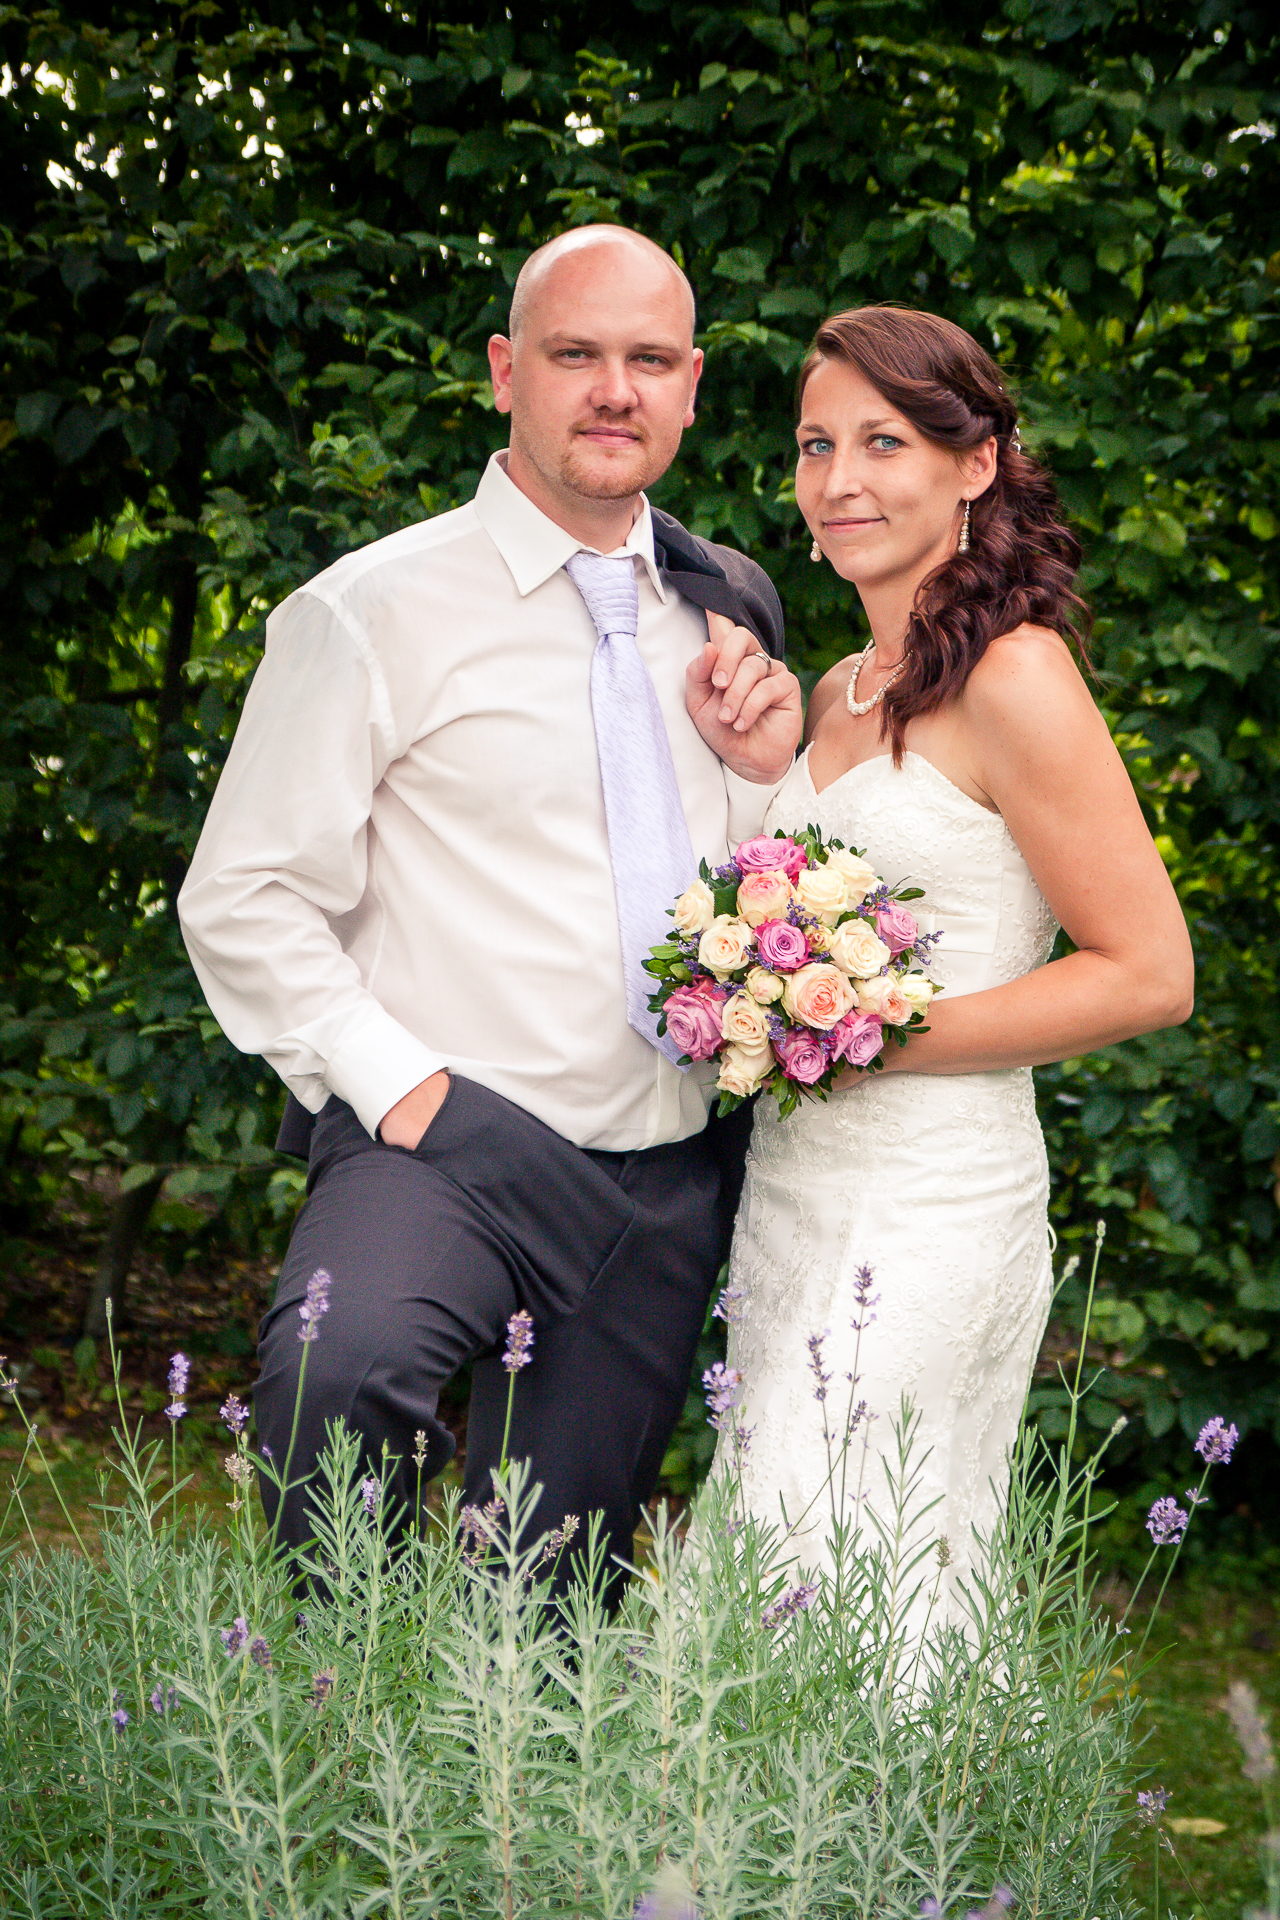 Svatební fotografie Eliška & Dan, Botanicus, Ostrá- svatební fotograf a svatební kameraman Studio Beautyfoto